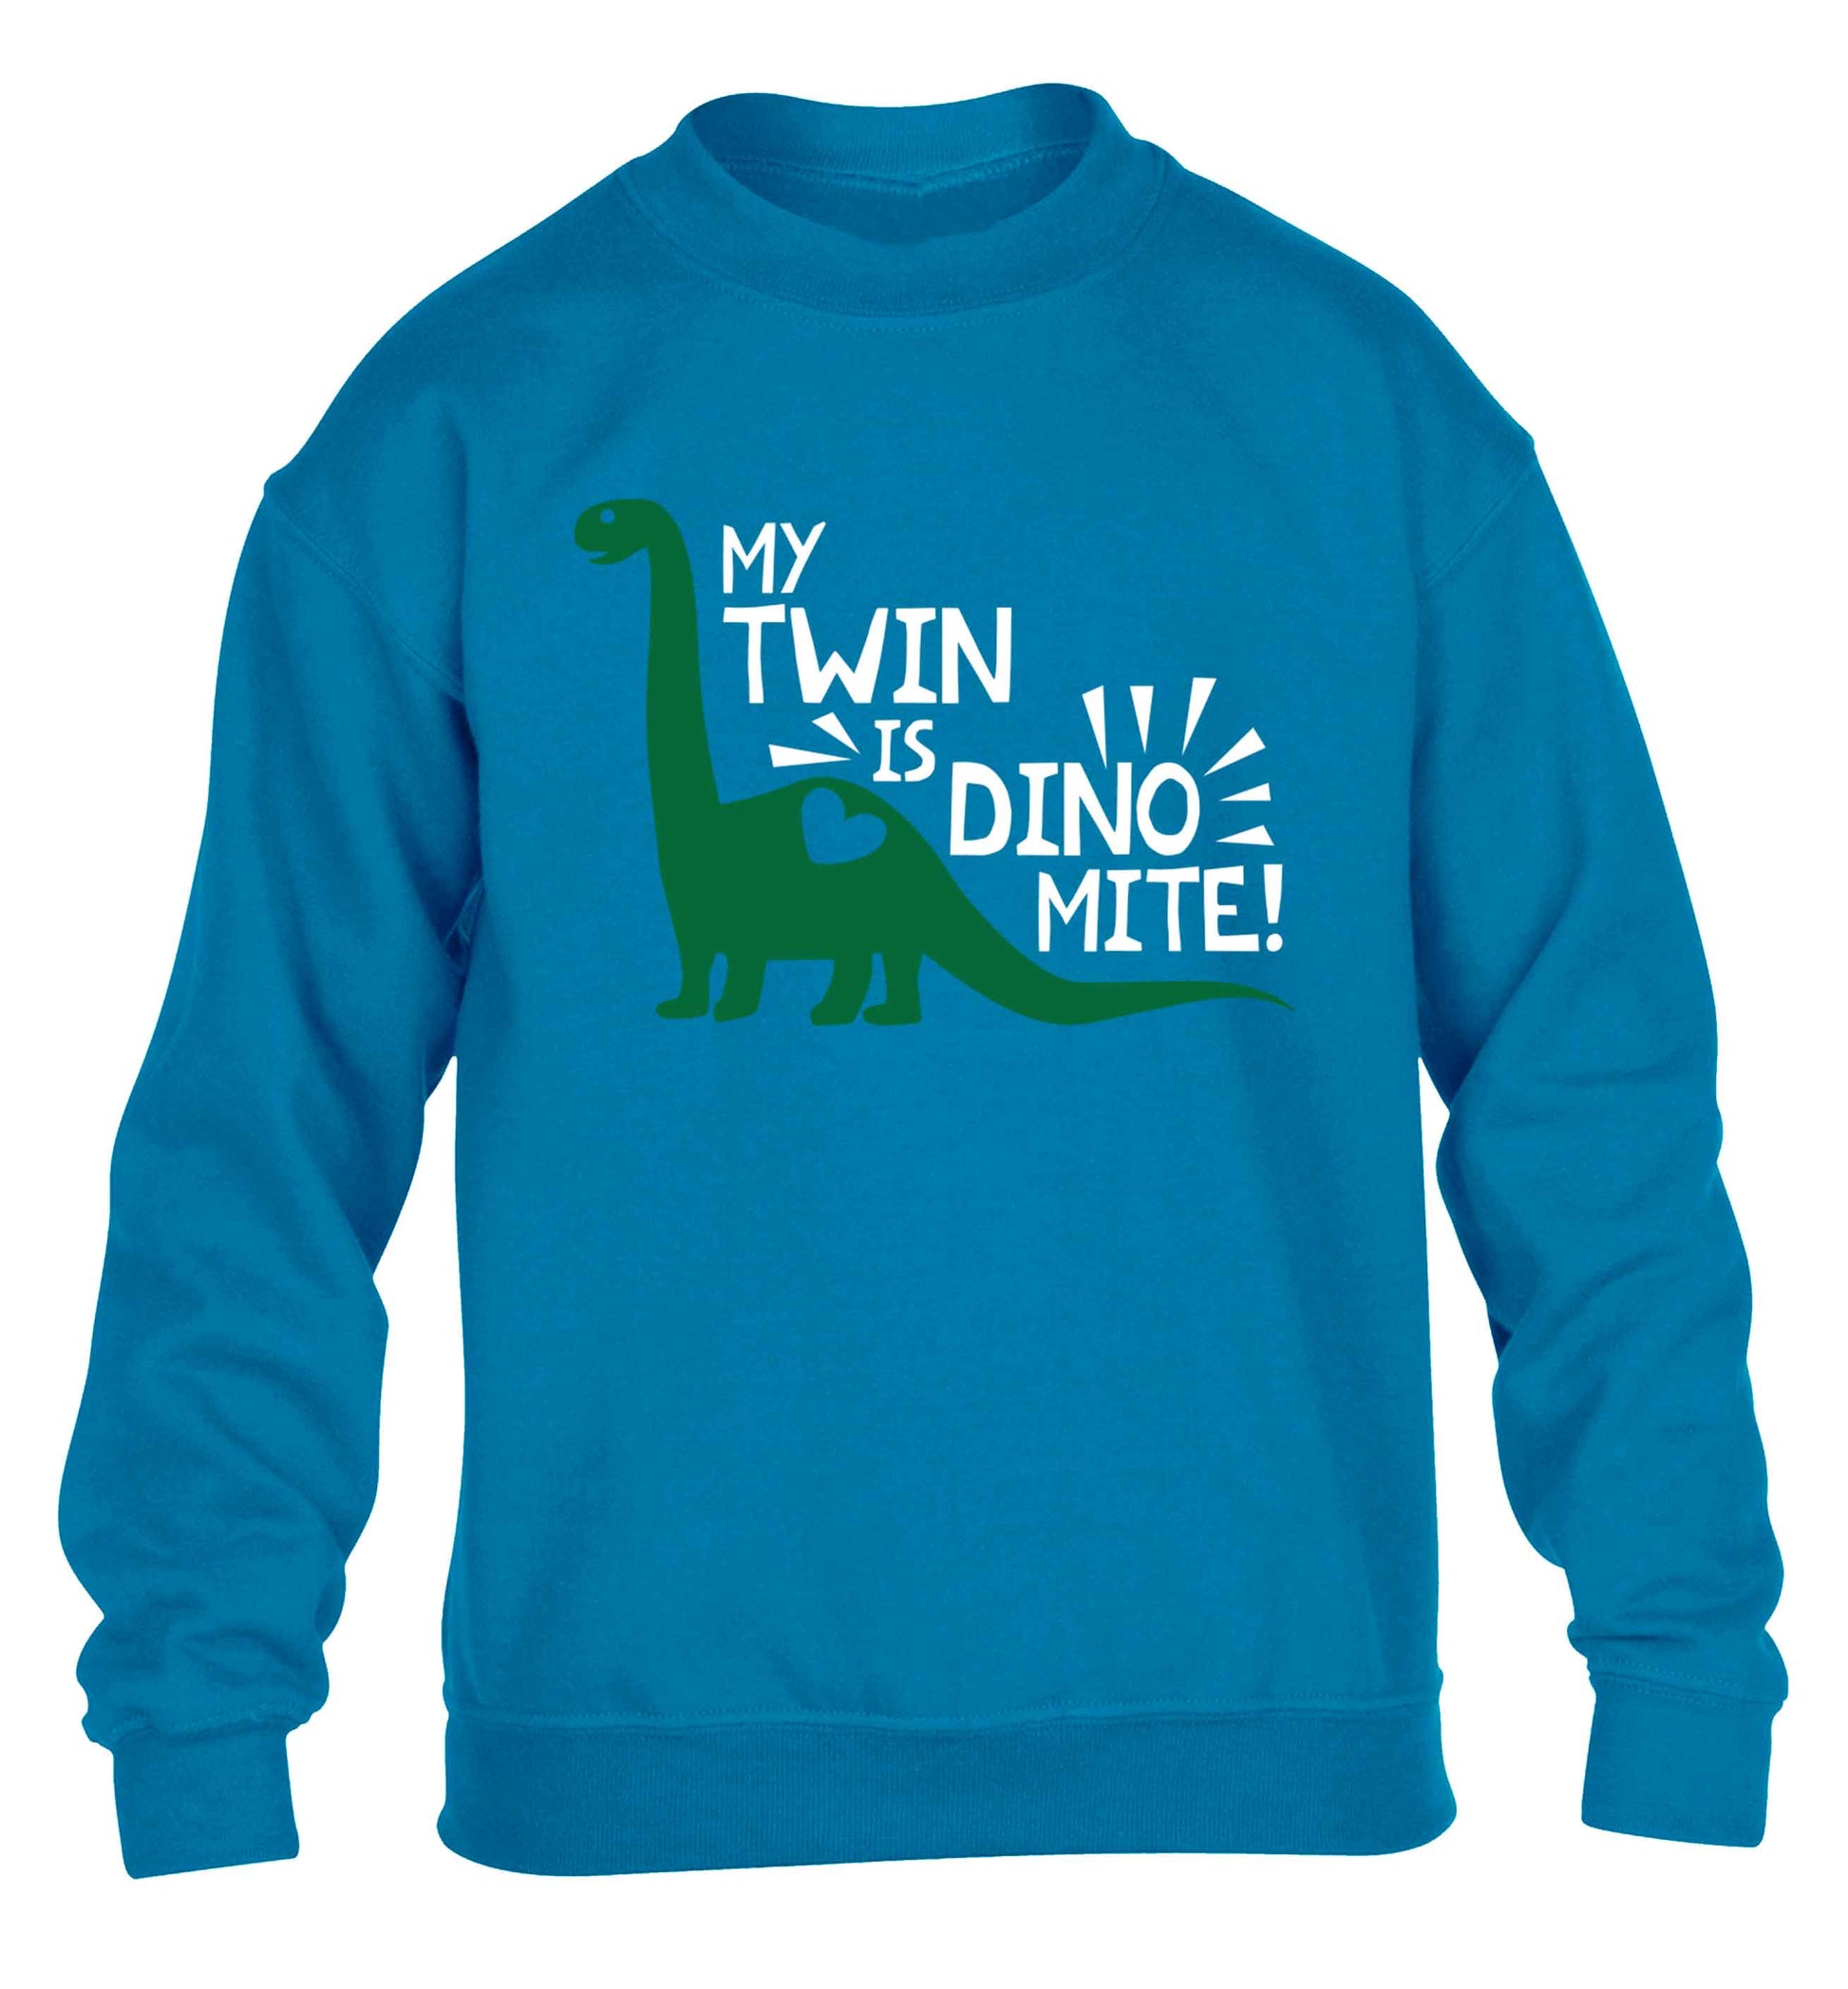 My twin is dinomite! children's blue sweater 12-13 Years